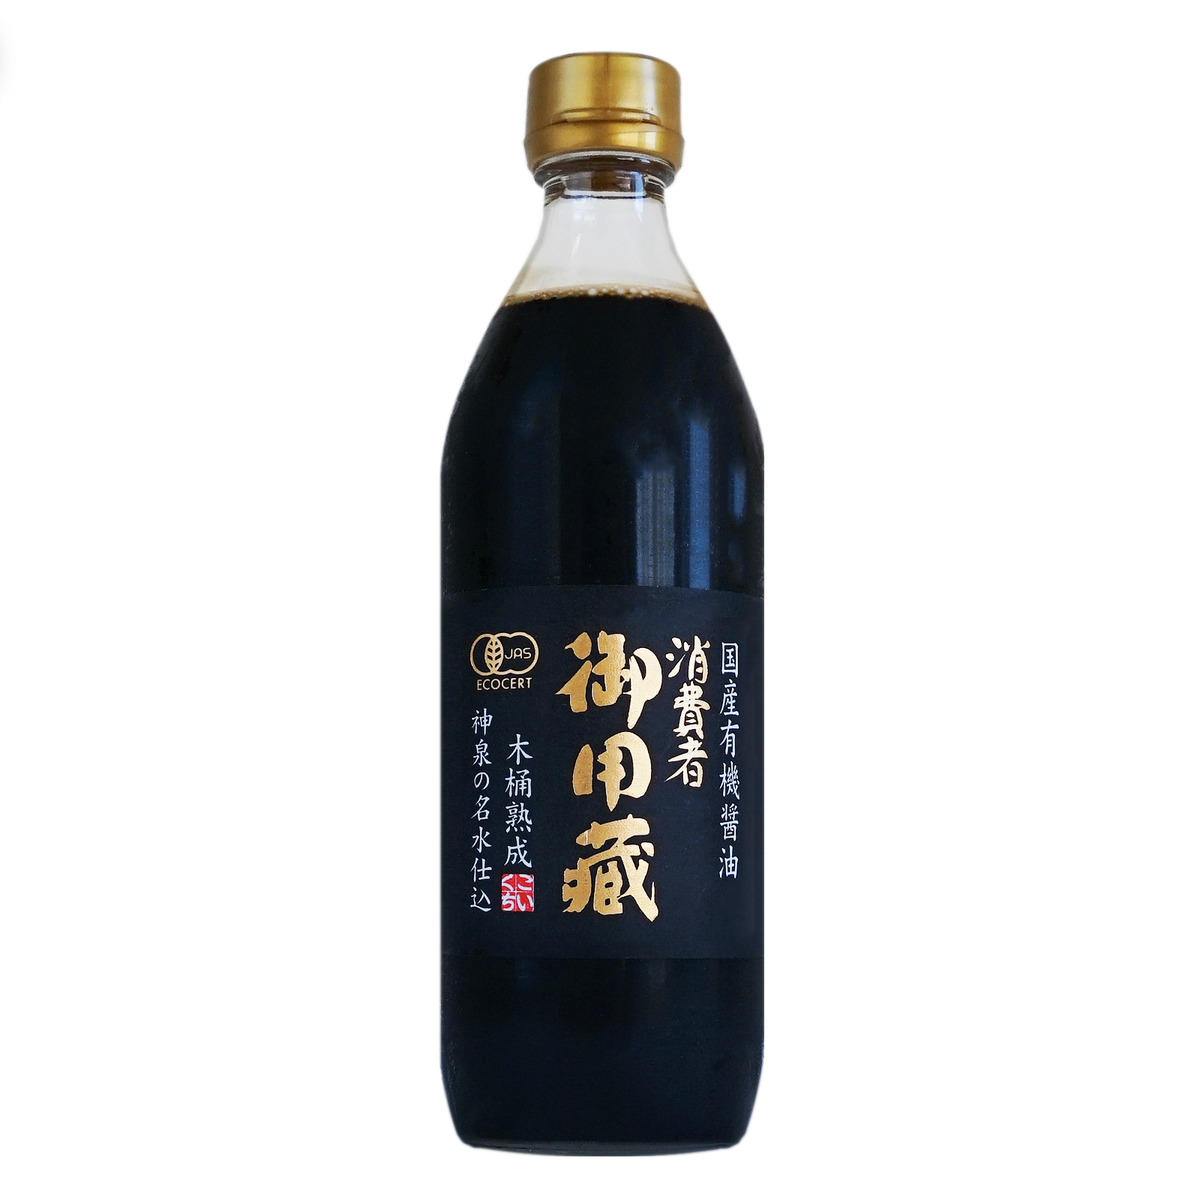 Certified Organic Additive-Free Dark Soy Sauce from Japan (500ml) - Horizon Farms